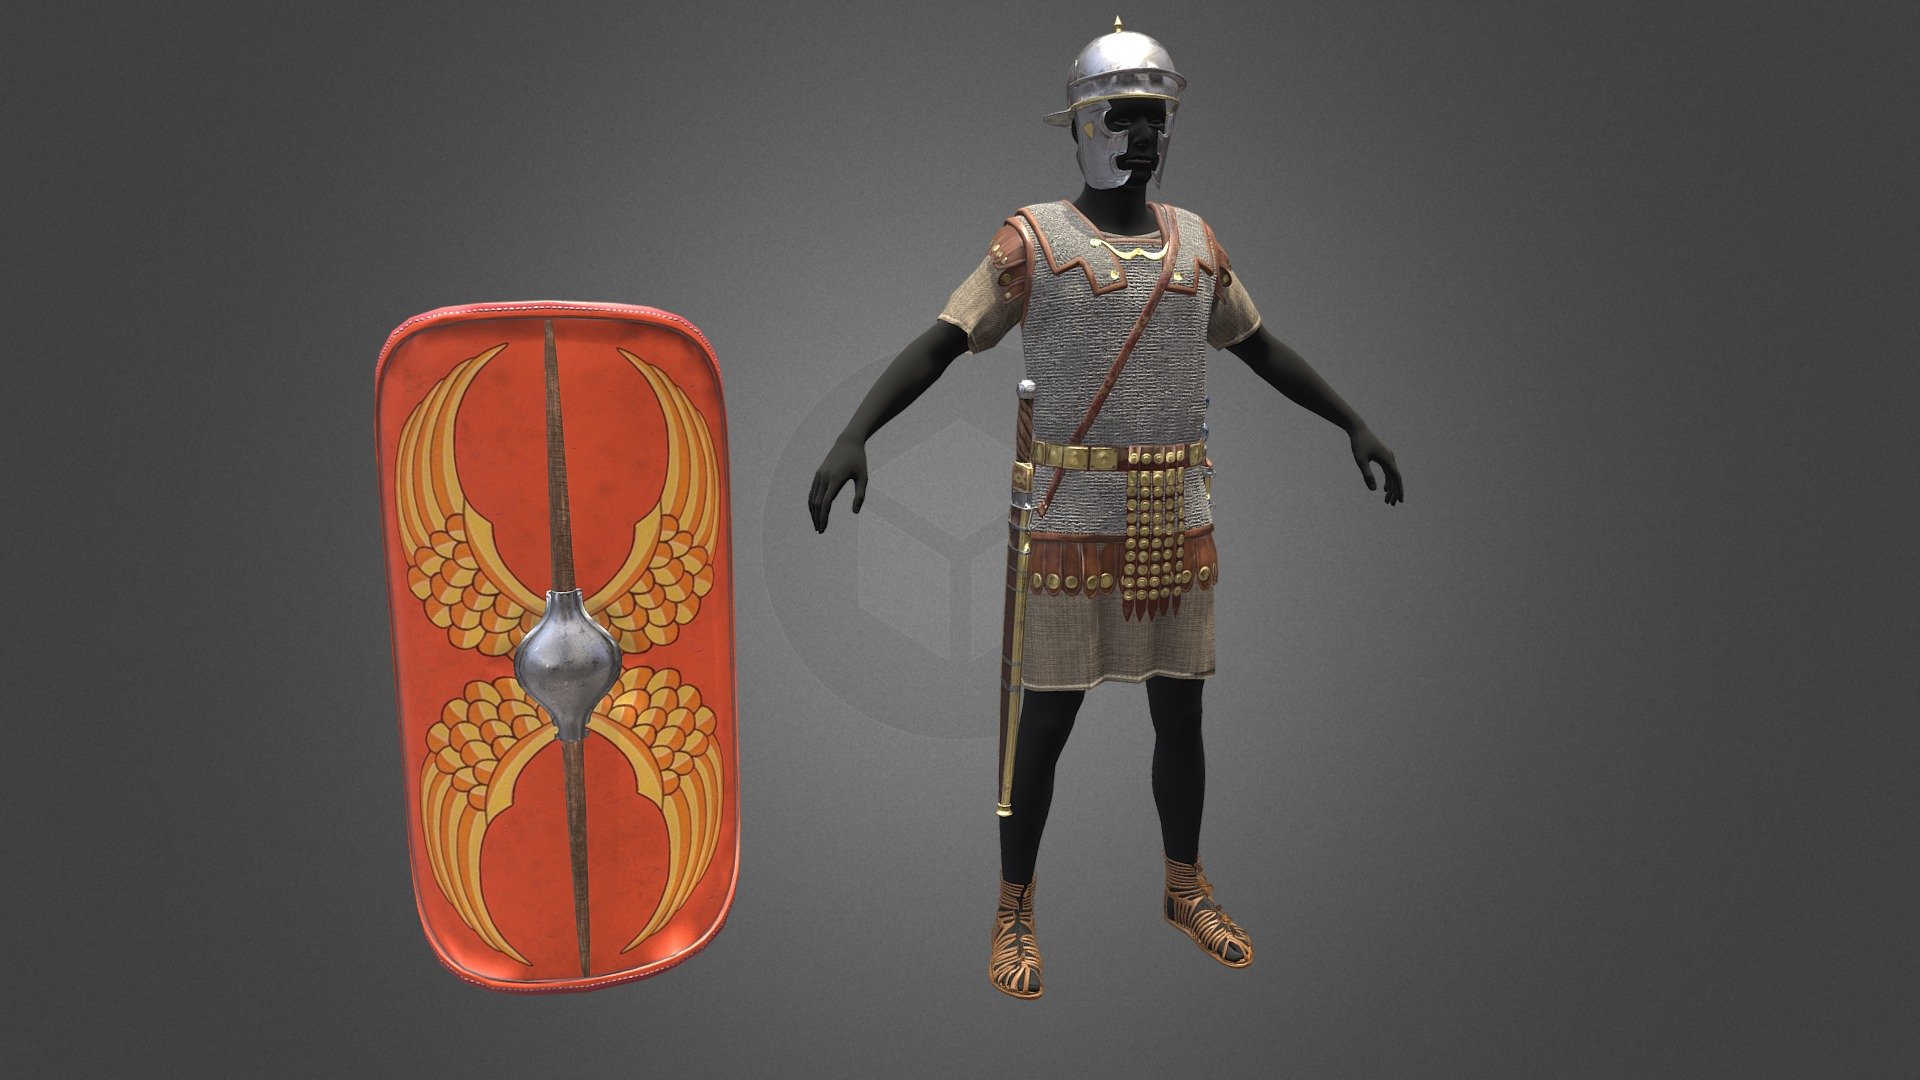 3D Roman Legionary
https://www.artstation.com/artwork/VyJrlZ - 3D Roman Legionary - 3D model by FAISAL AIYACH (@Faisalaiyach) 3d model